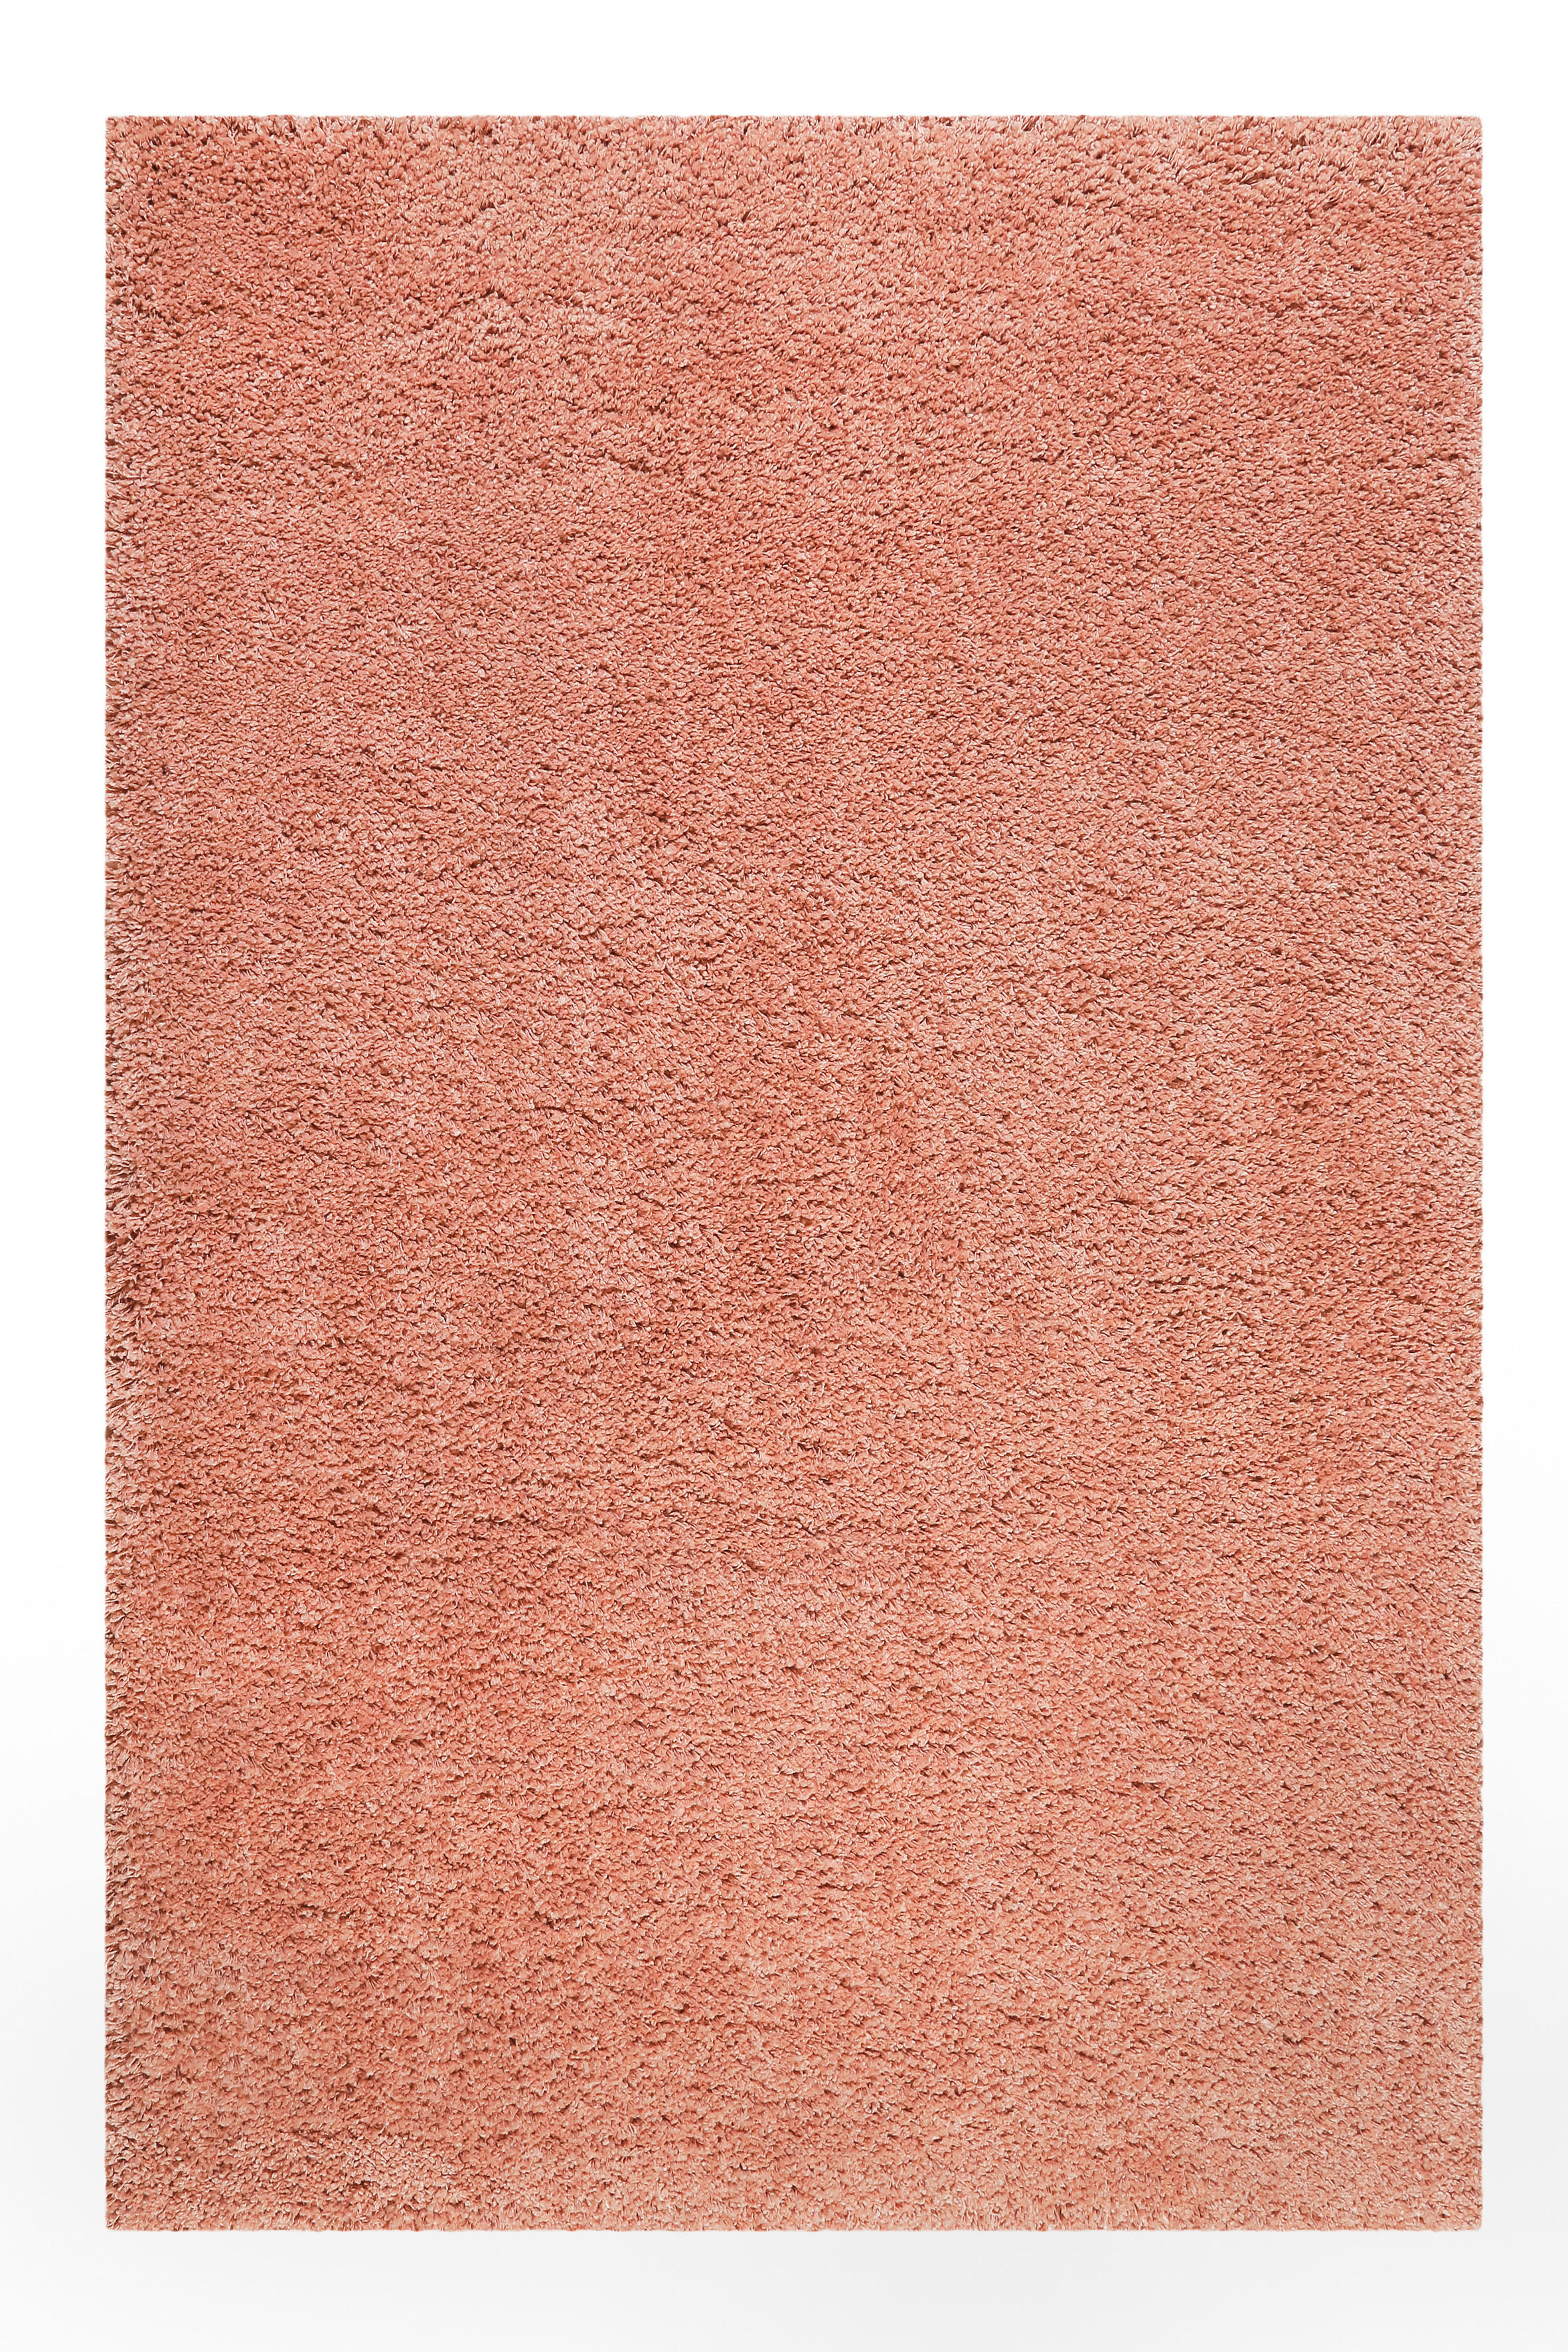 WEBTEPPICH  133/200 cm  Rosa, Hellrosa   - Hellrosa/Rosa, KONVENTIONELL, Textil (133/200cm) - Esprit